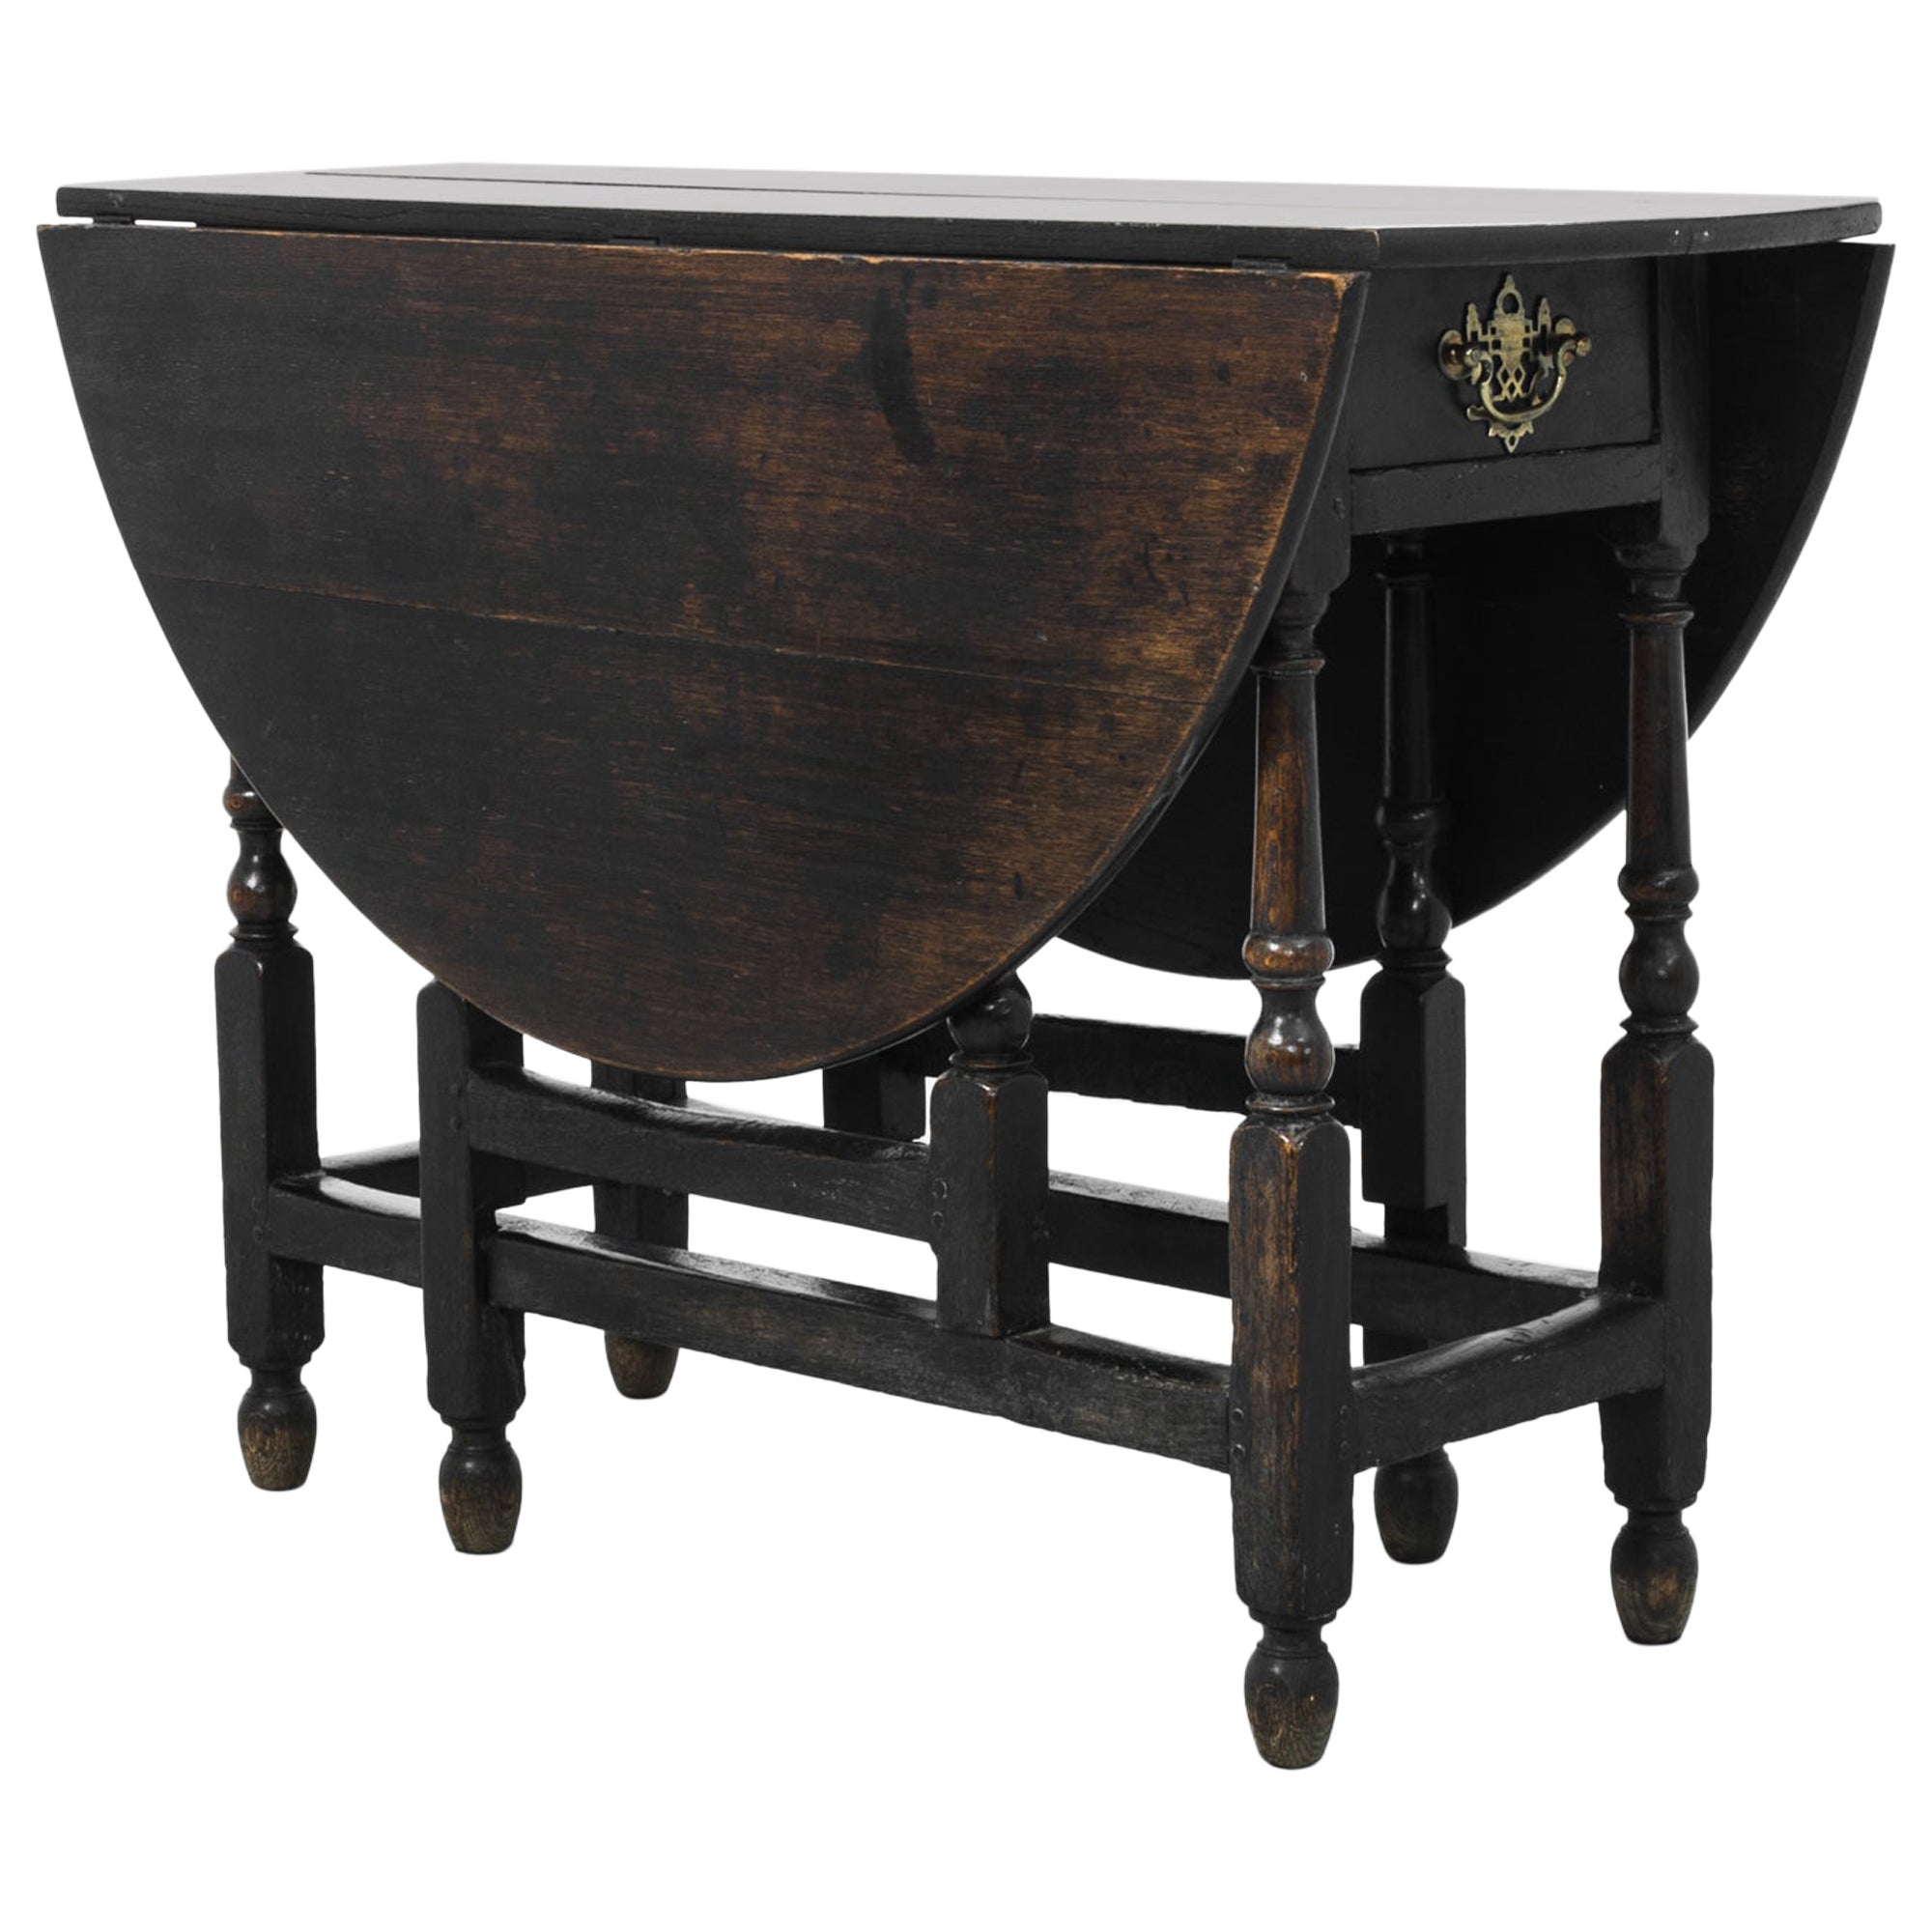 Antique British Wooden Gateleg Table